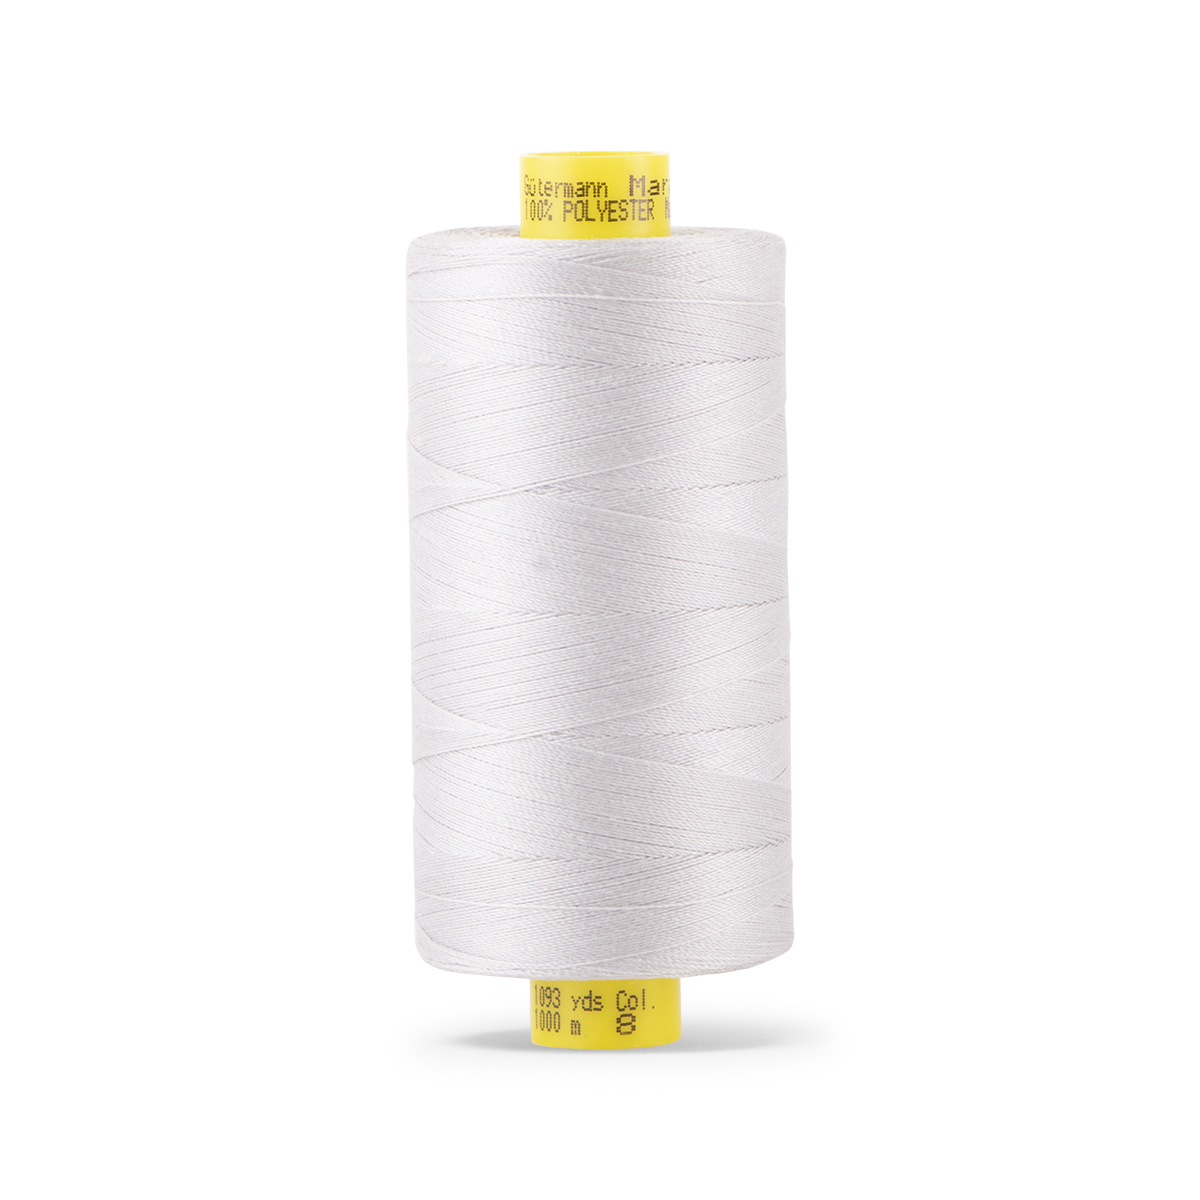 Lemon Peel Gutermann Recycled Polyester Thread - Porcelynne